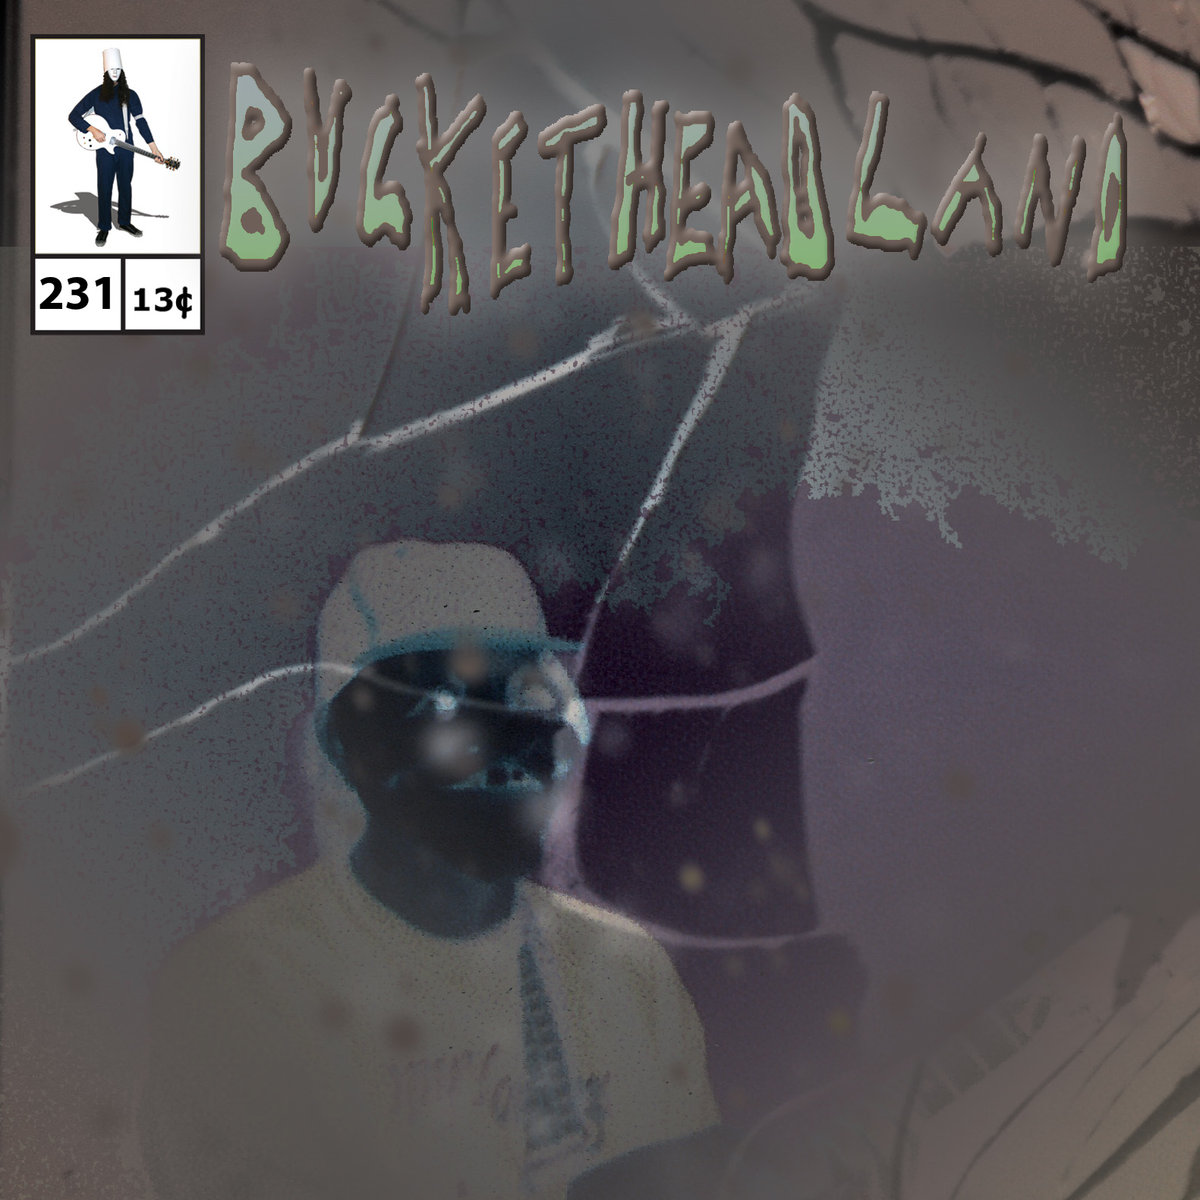 Buckethead - Pike 231: Drift (2016)